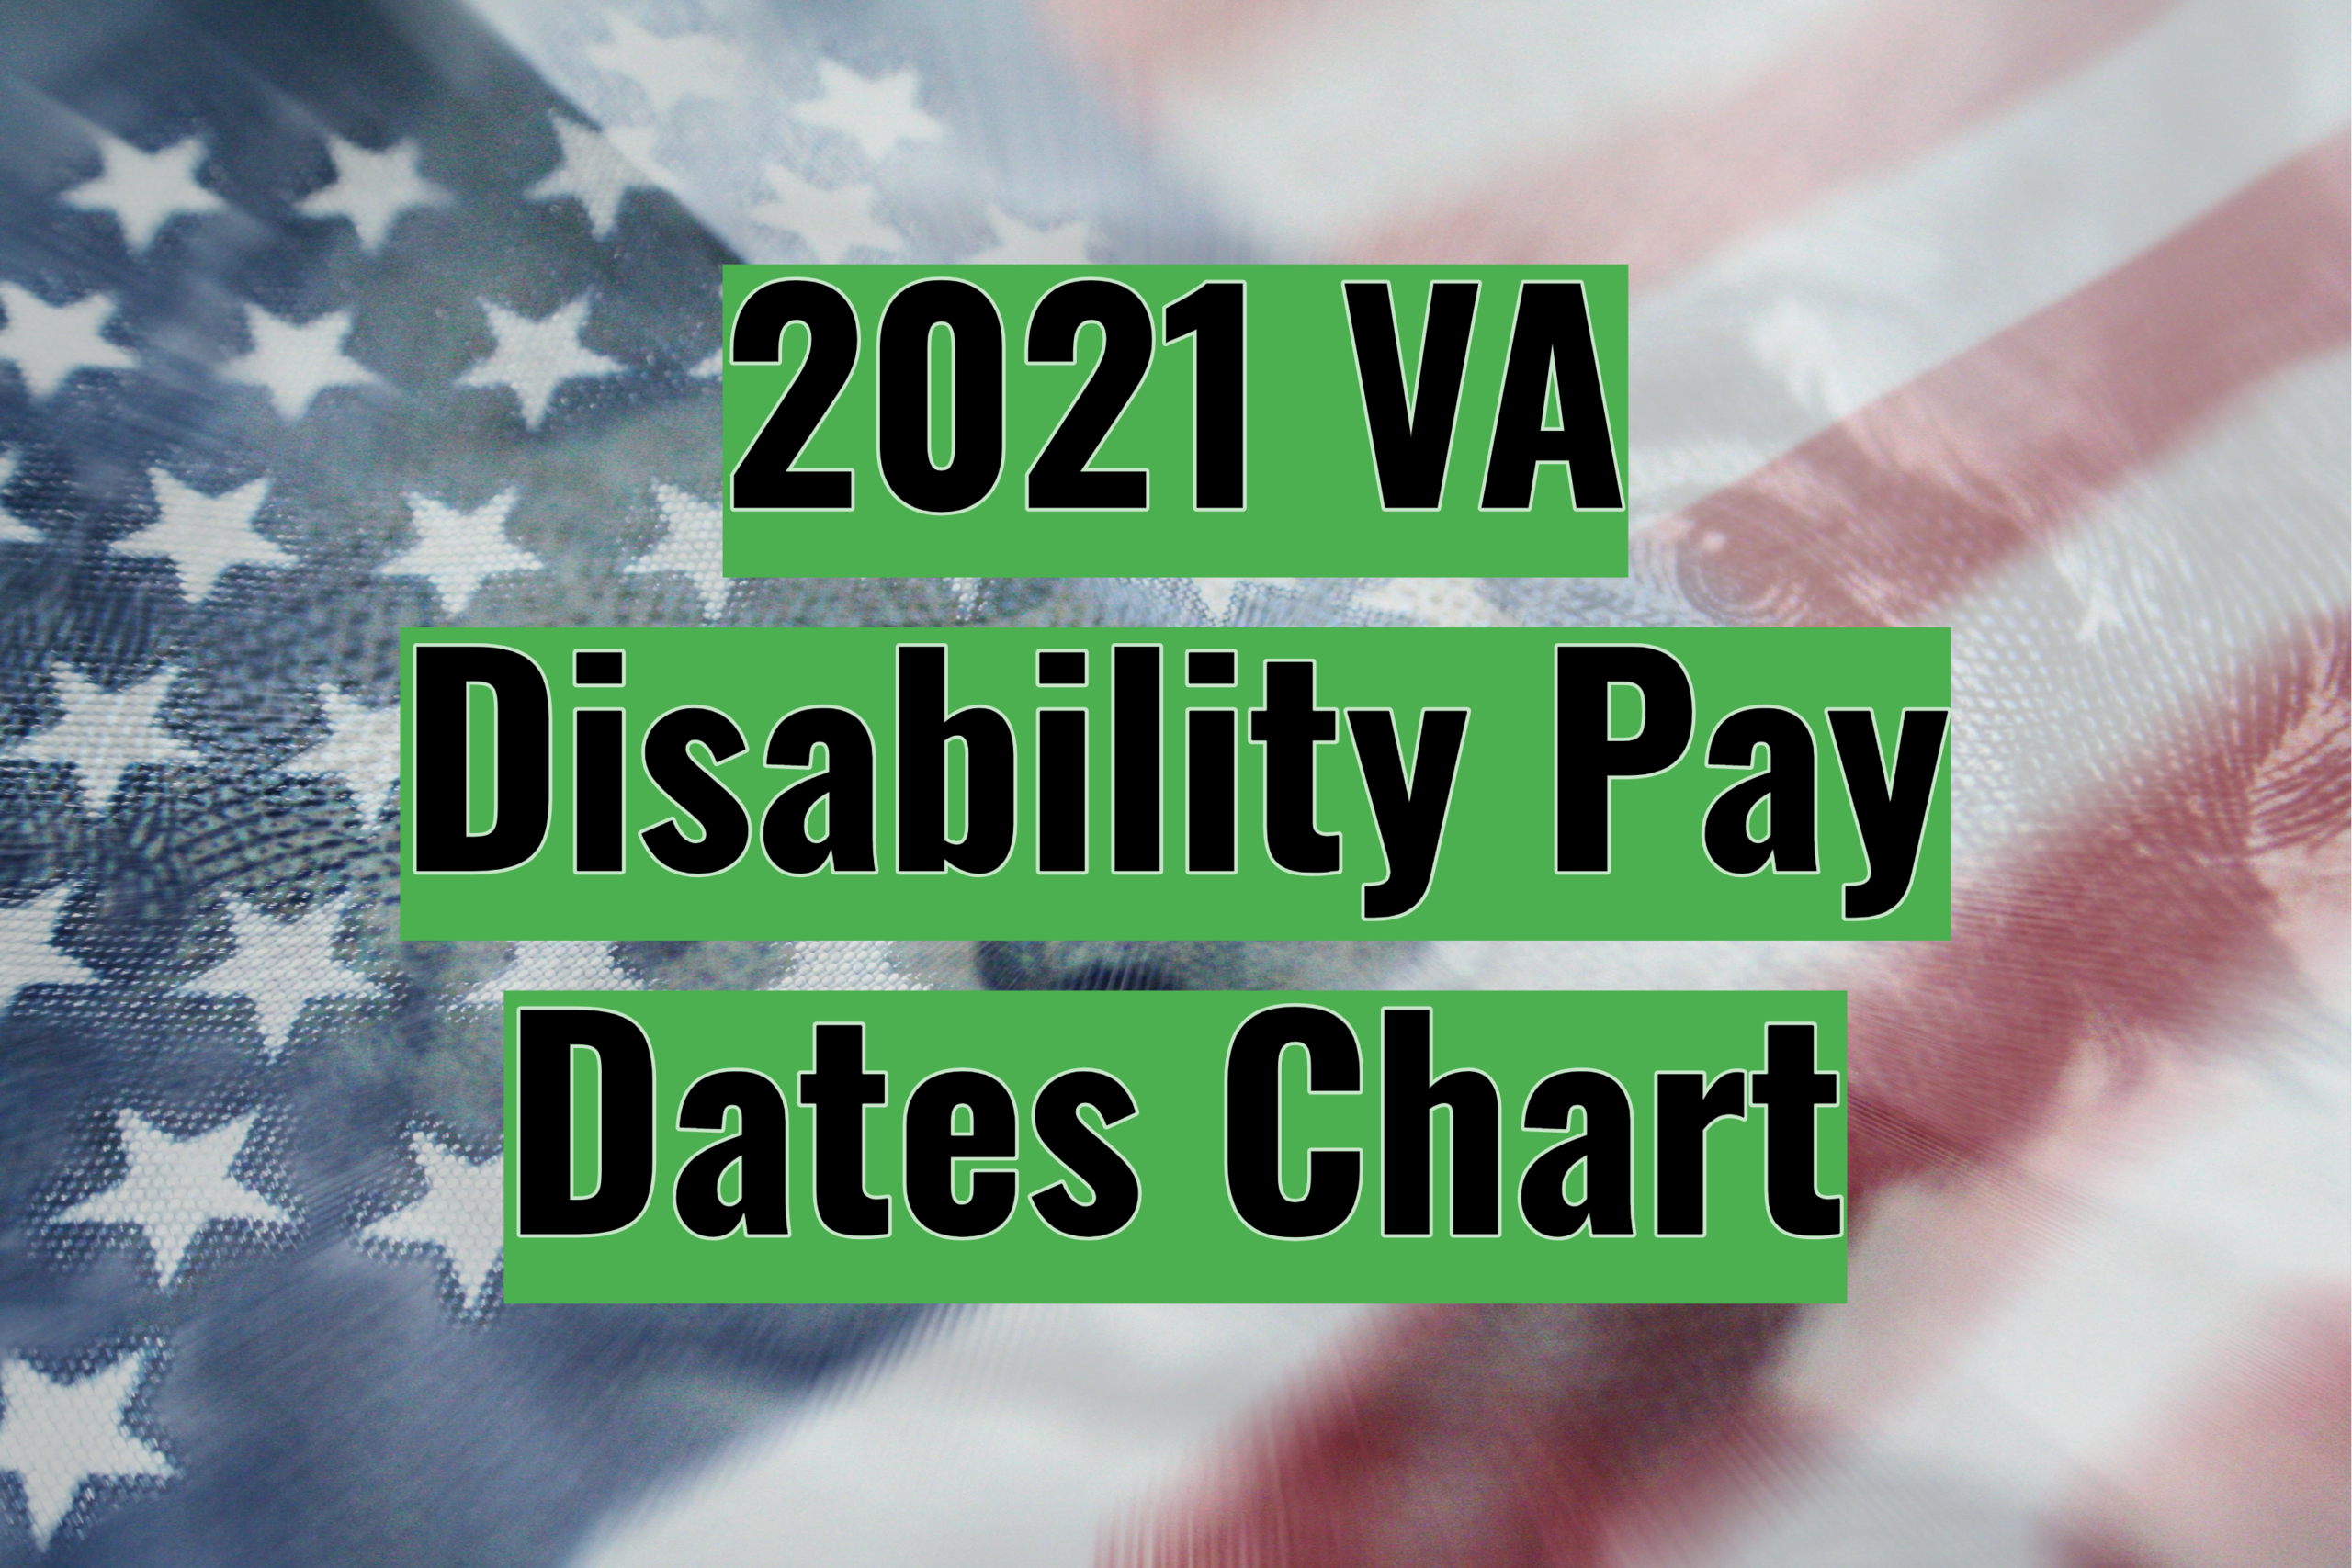 VA Disability Pay Dates 2021